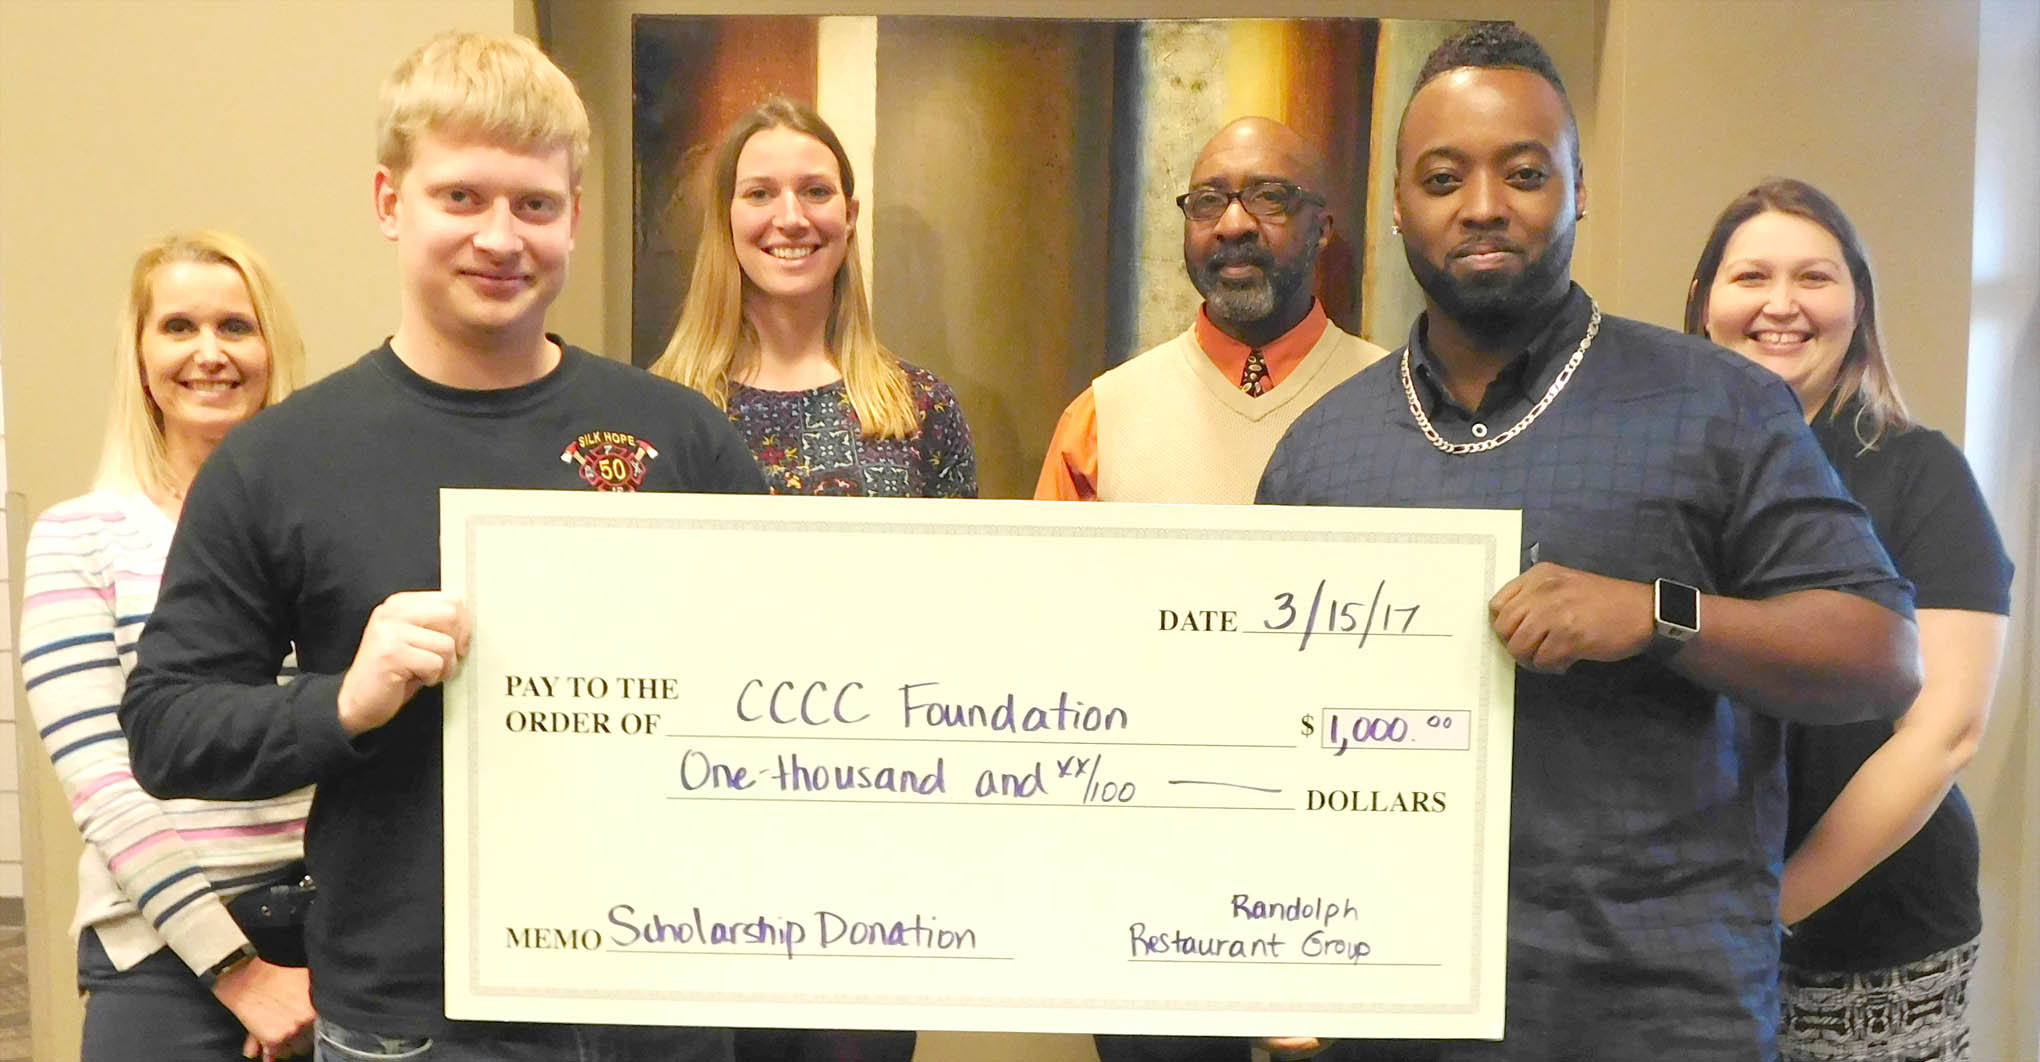 Read the full story, Randolph Restaurant Group provides scholarship funding for program at CCCC